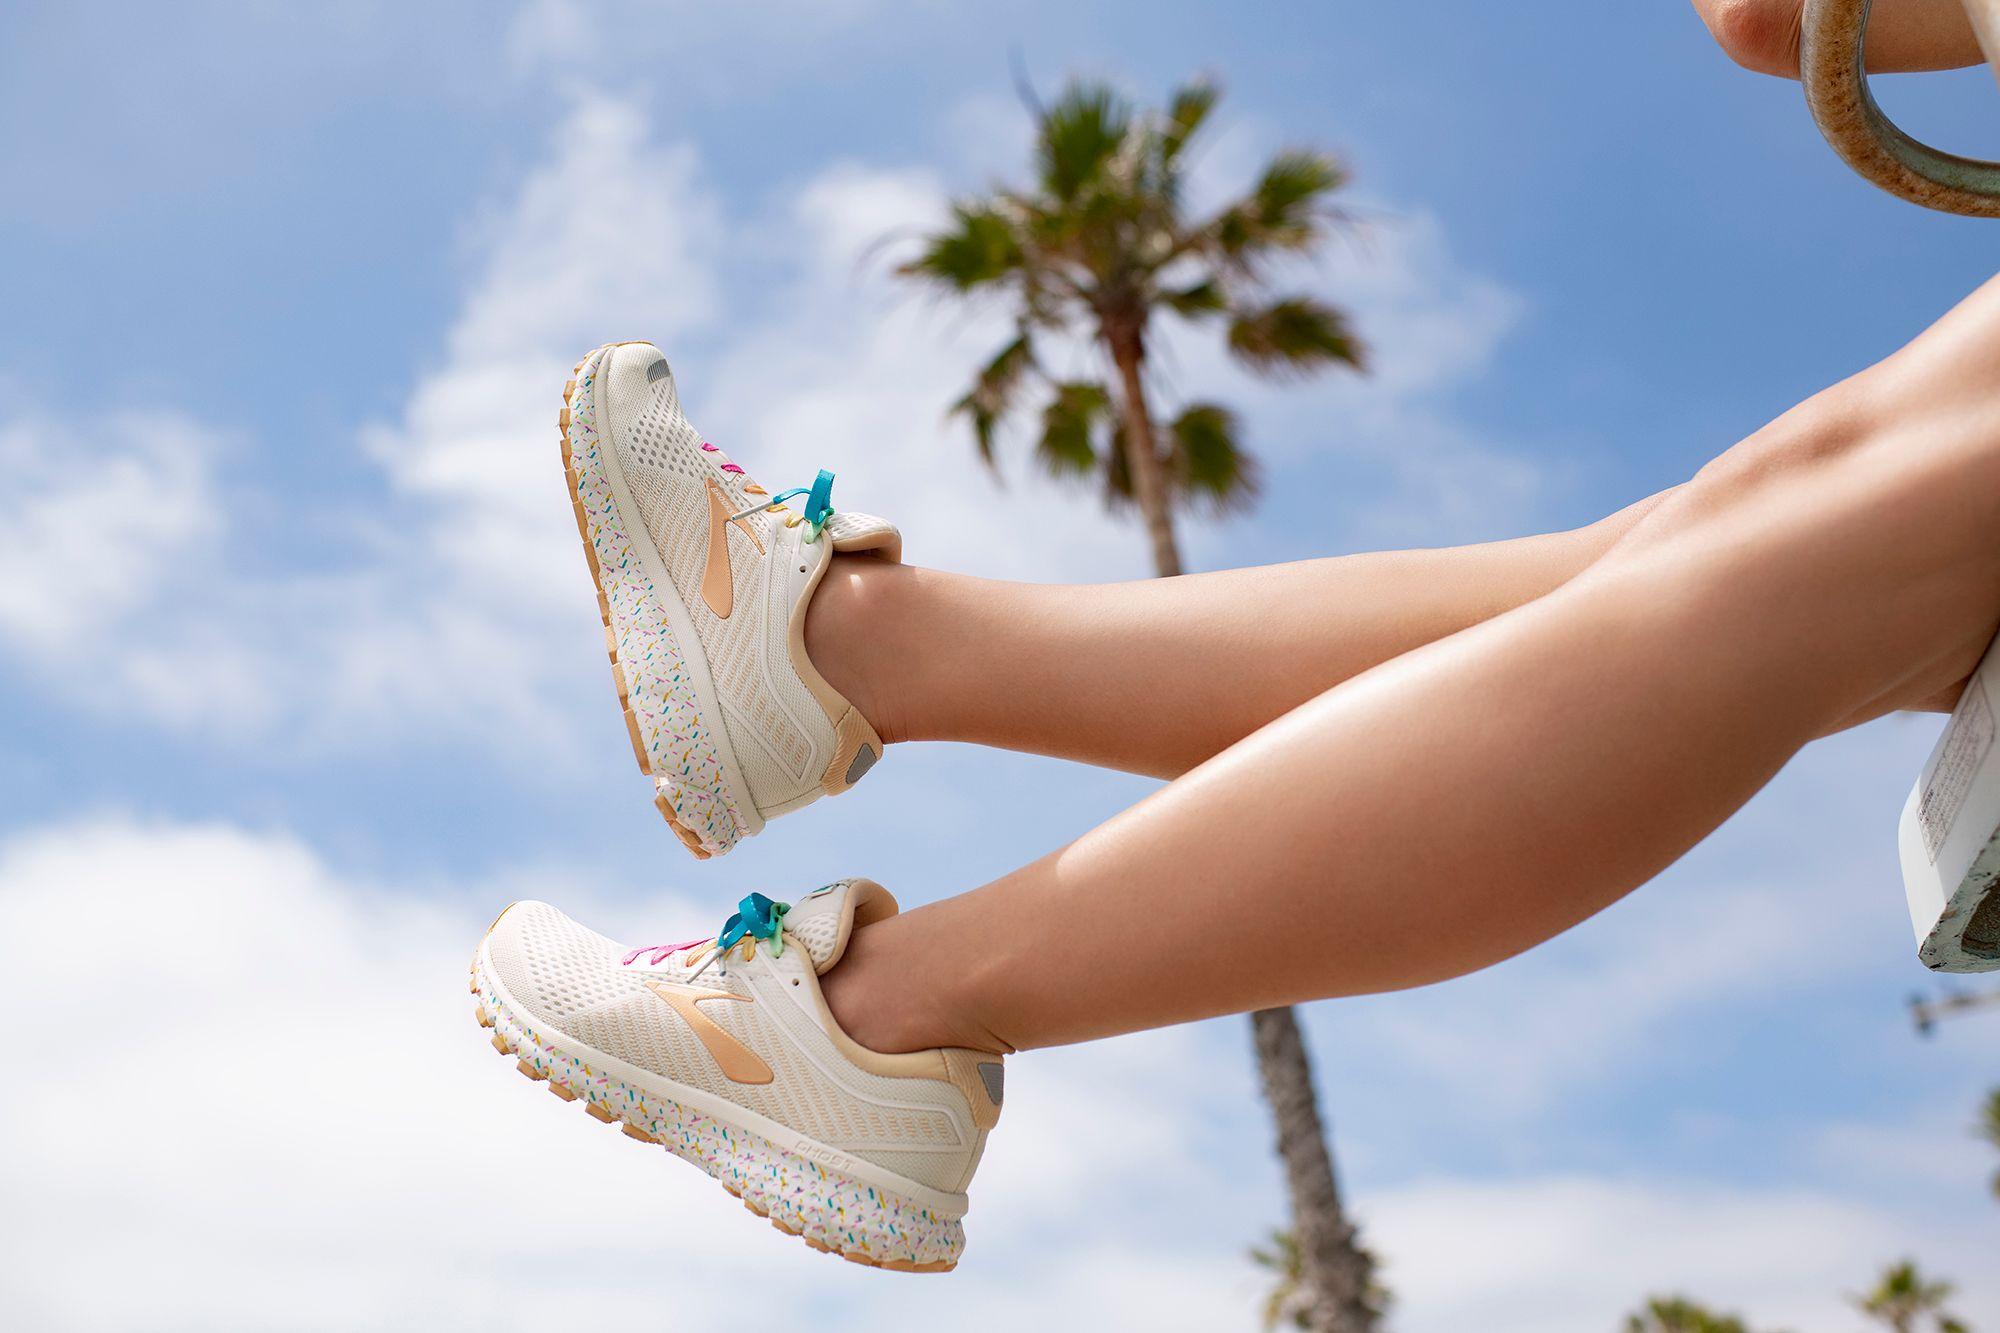 brooks women's ghost 12 vanilla sprinkles running shoes